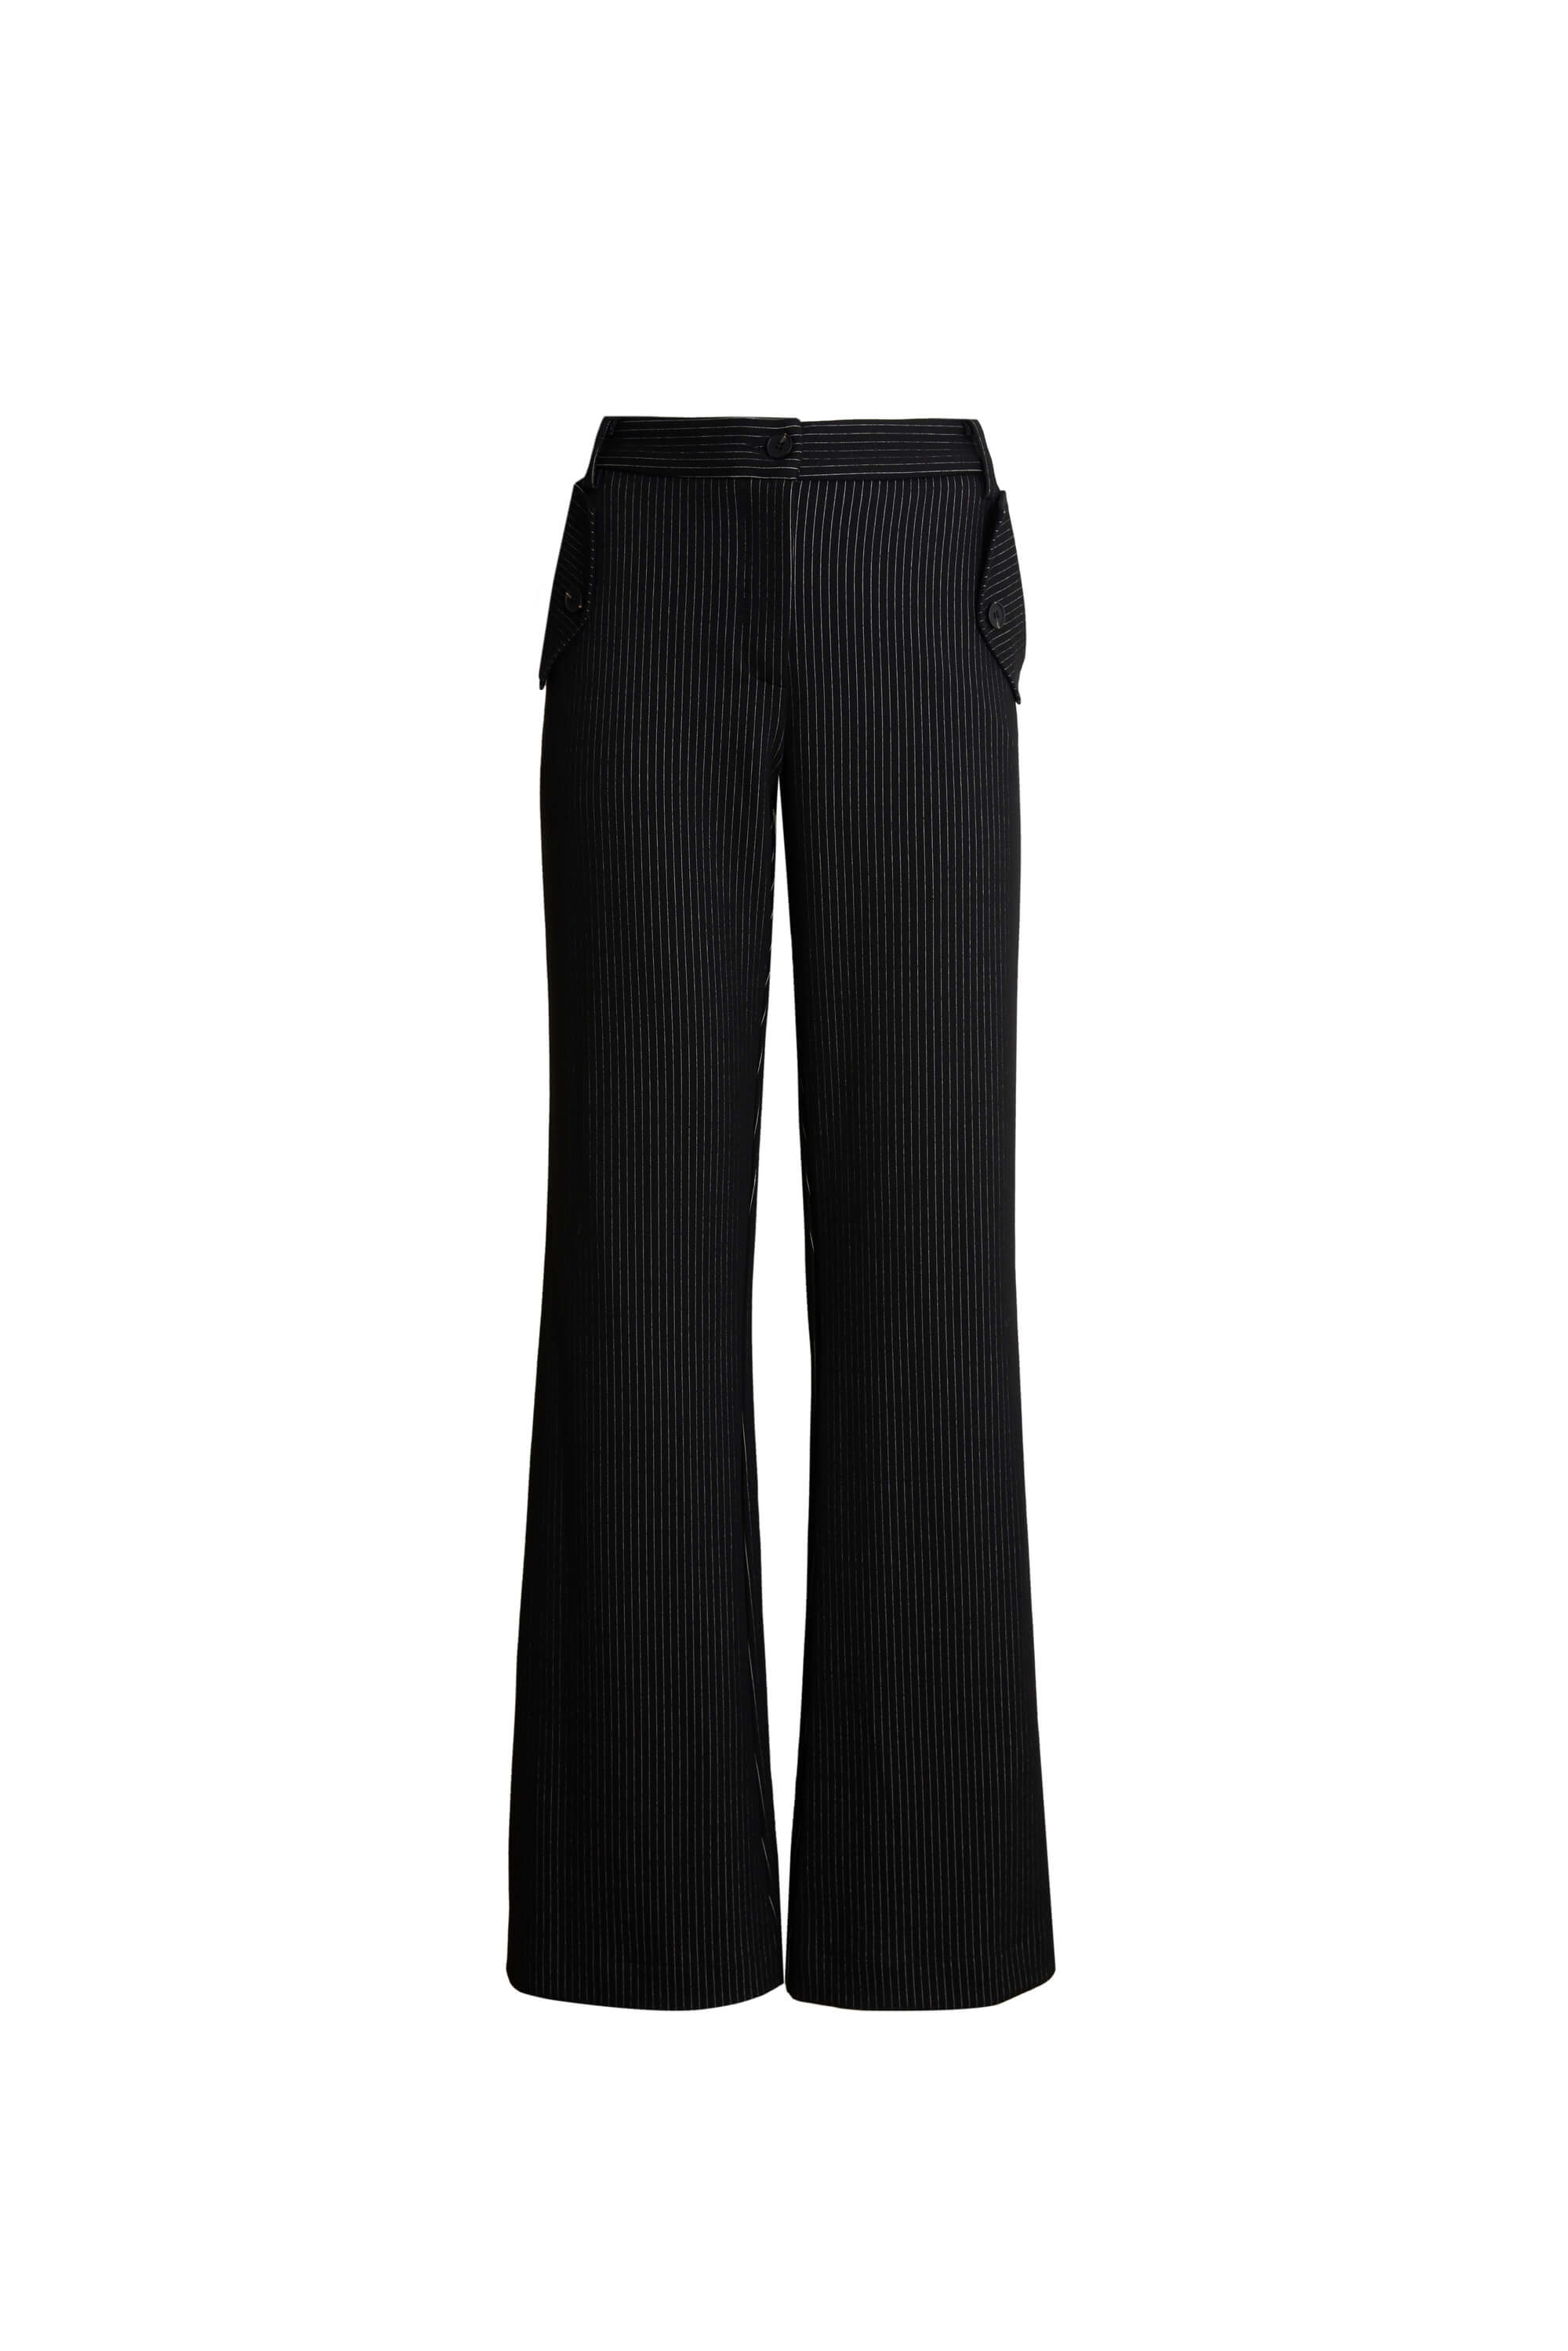 Women’s Black Pin Stripe Tailored Trousers Extra Large James Lakeland